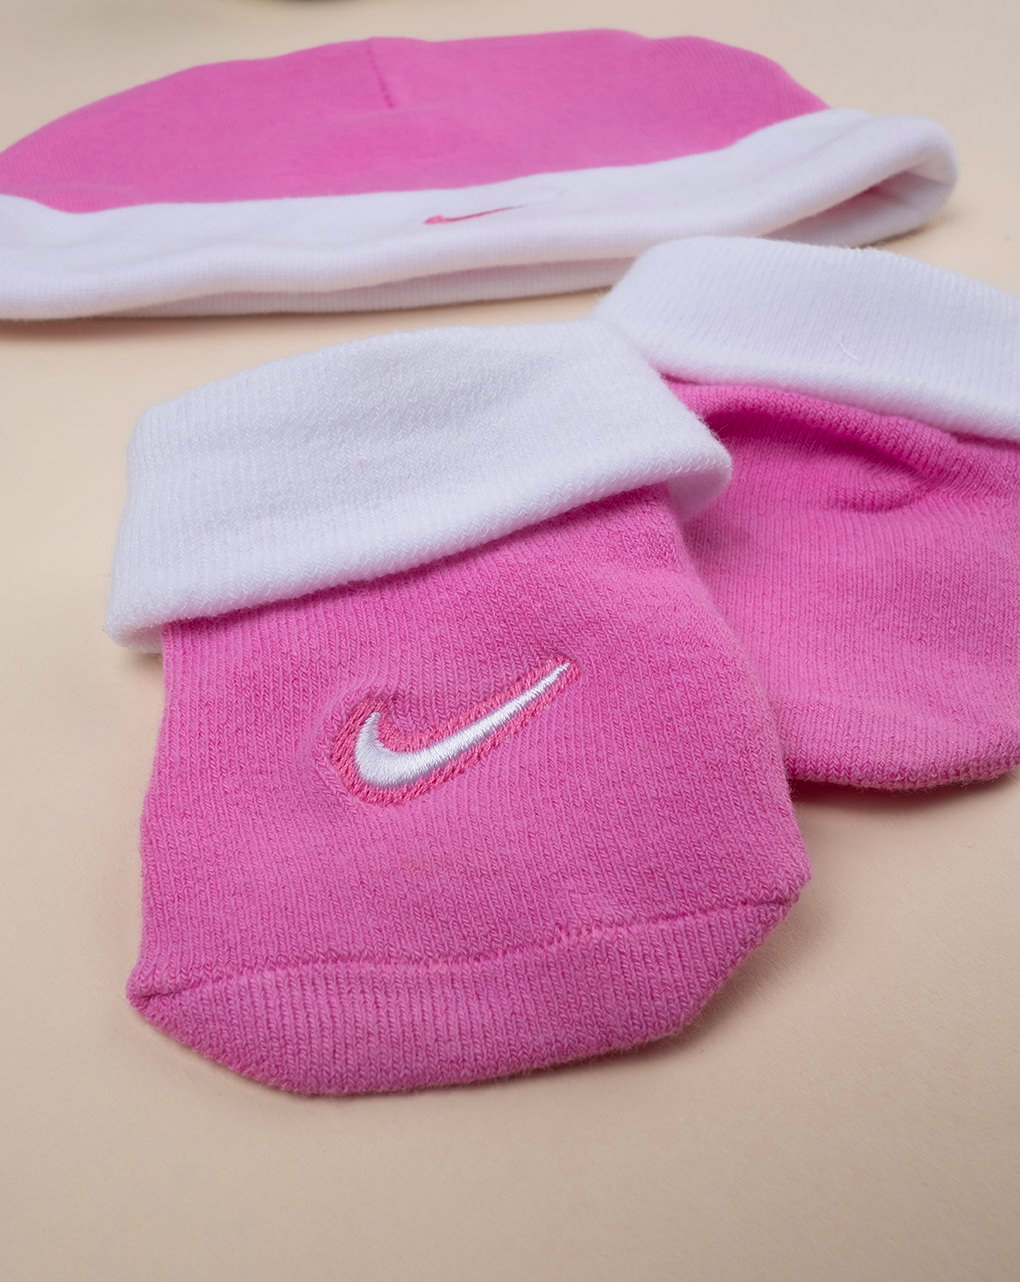 Conjunto nike 3 piezas bebé niña rosa - Nike